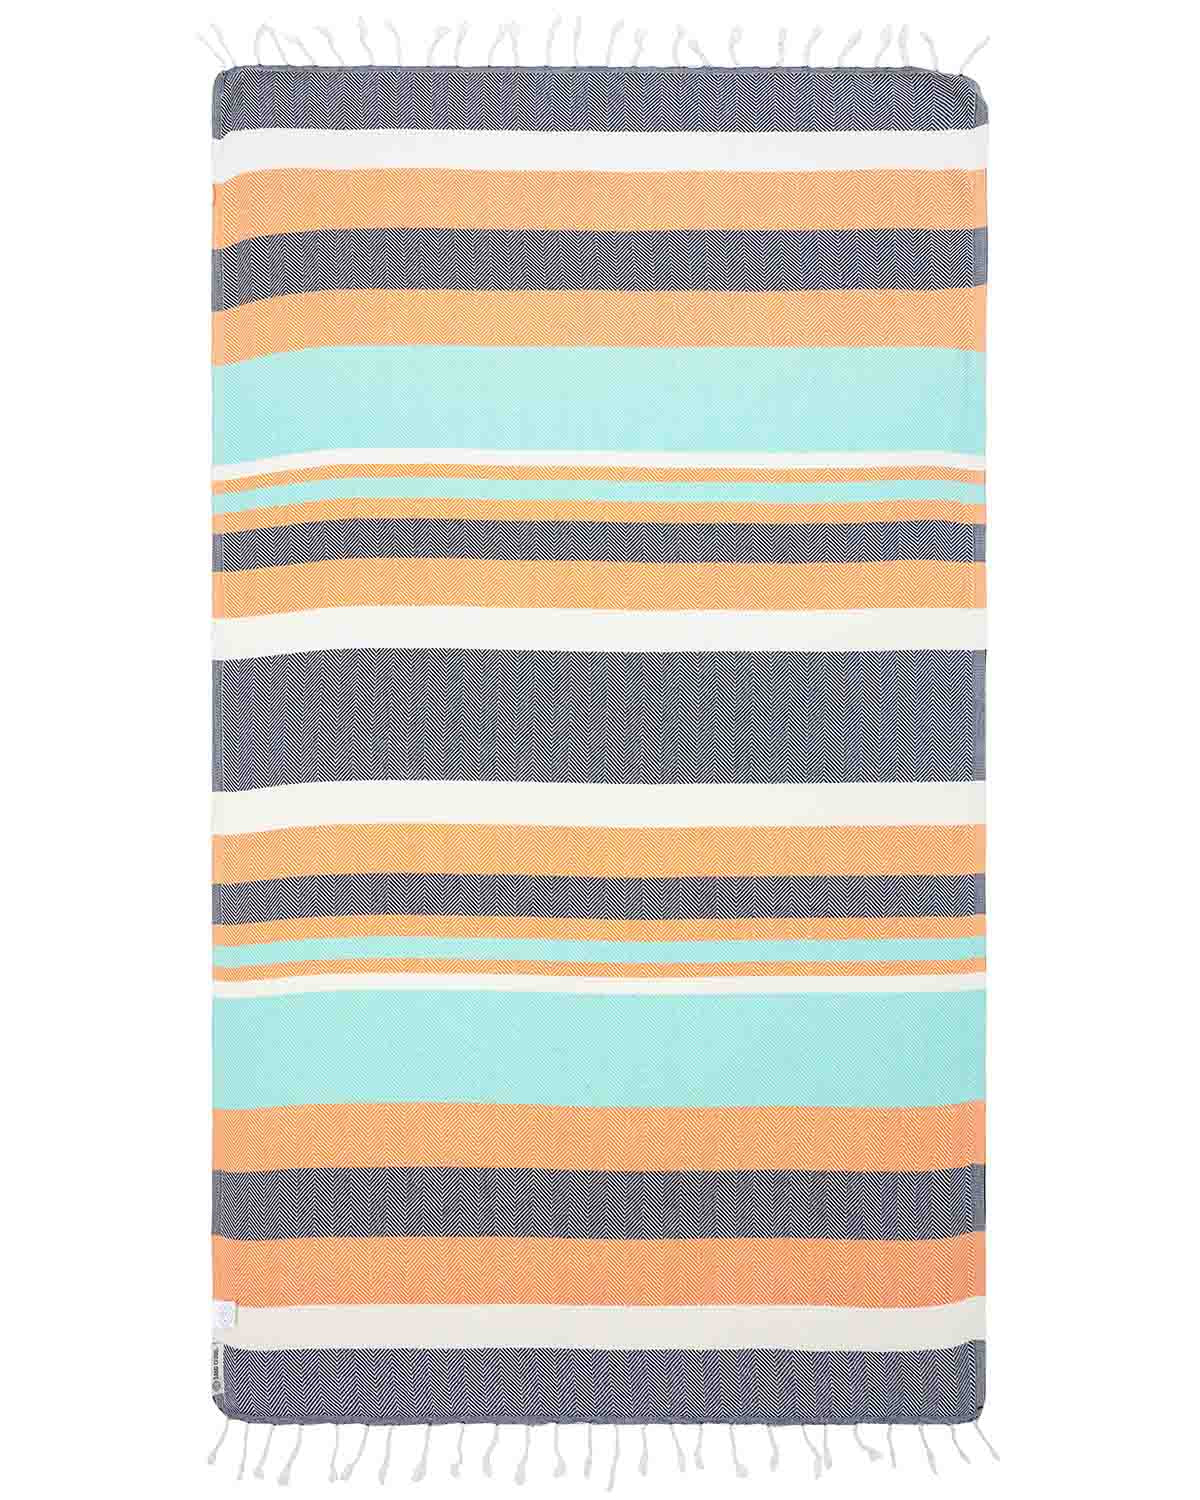 Sand Cloud x Surfrider Set Stripe Towel